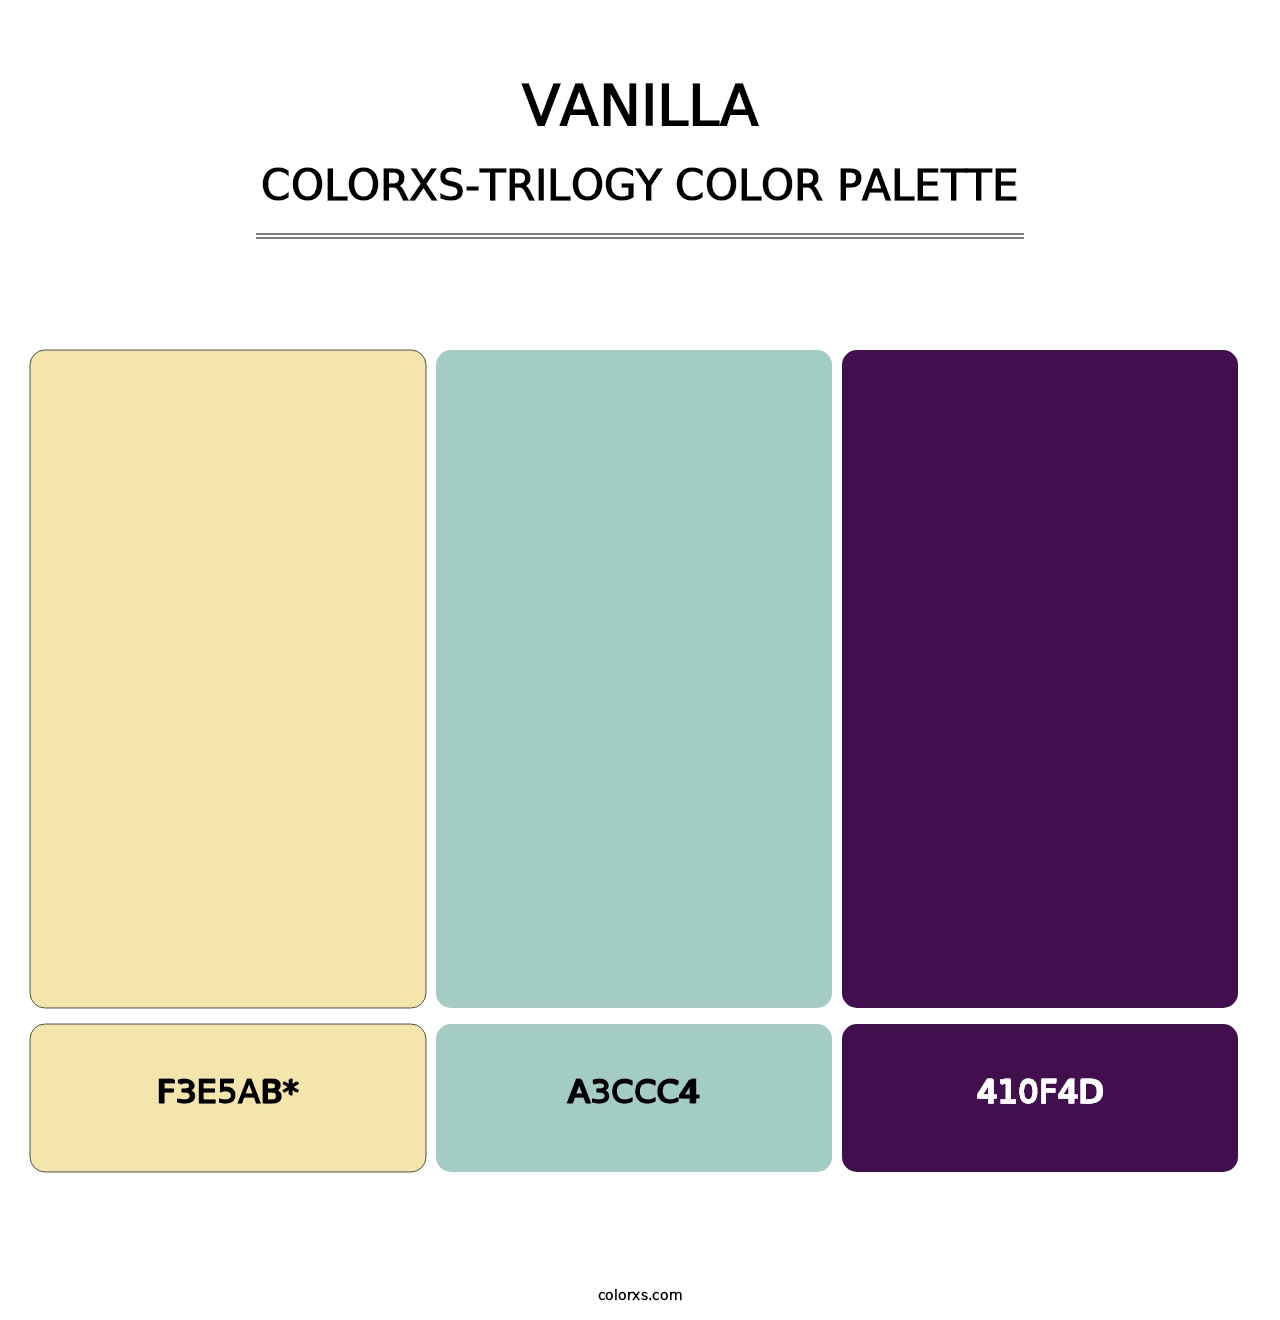 Vanilla - Colorxs Trilogy Palette